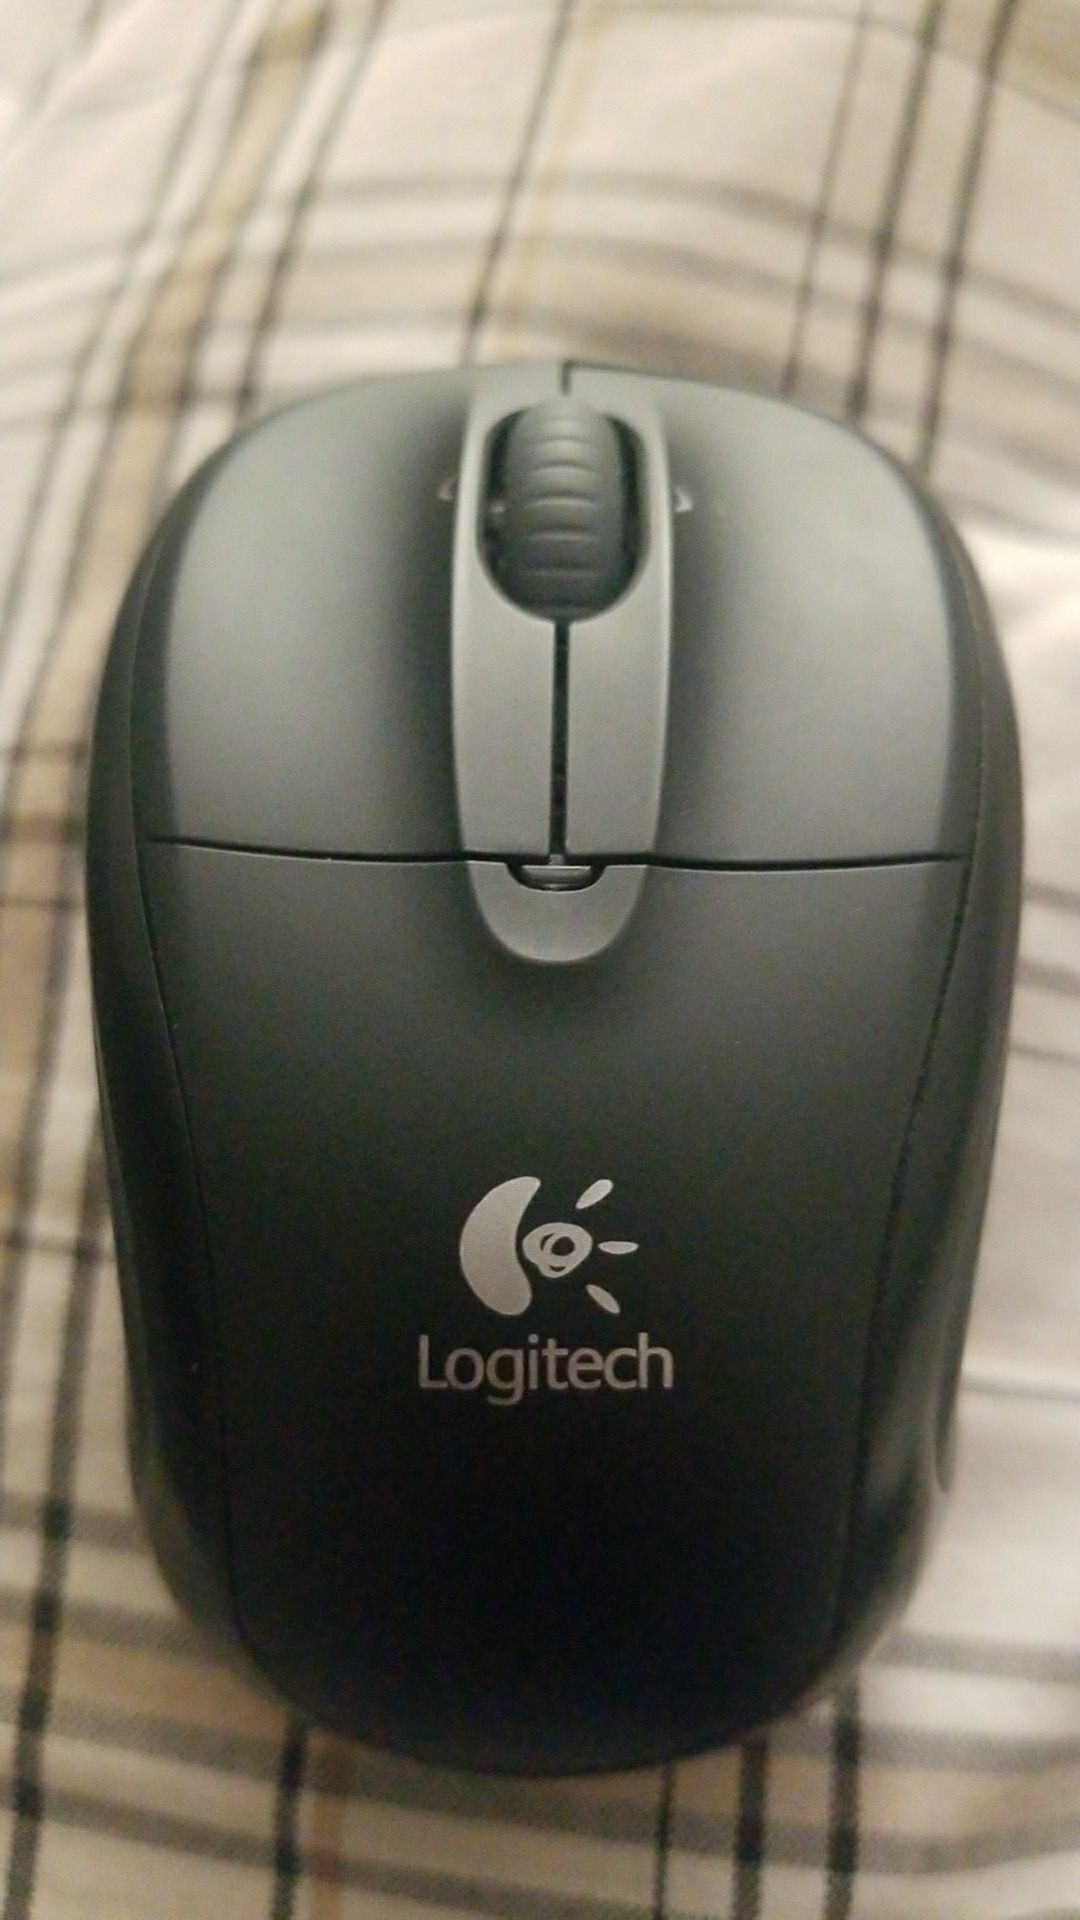 Logitech m305 wireless mouse